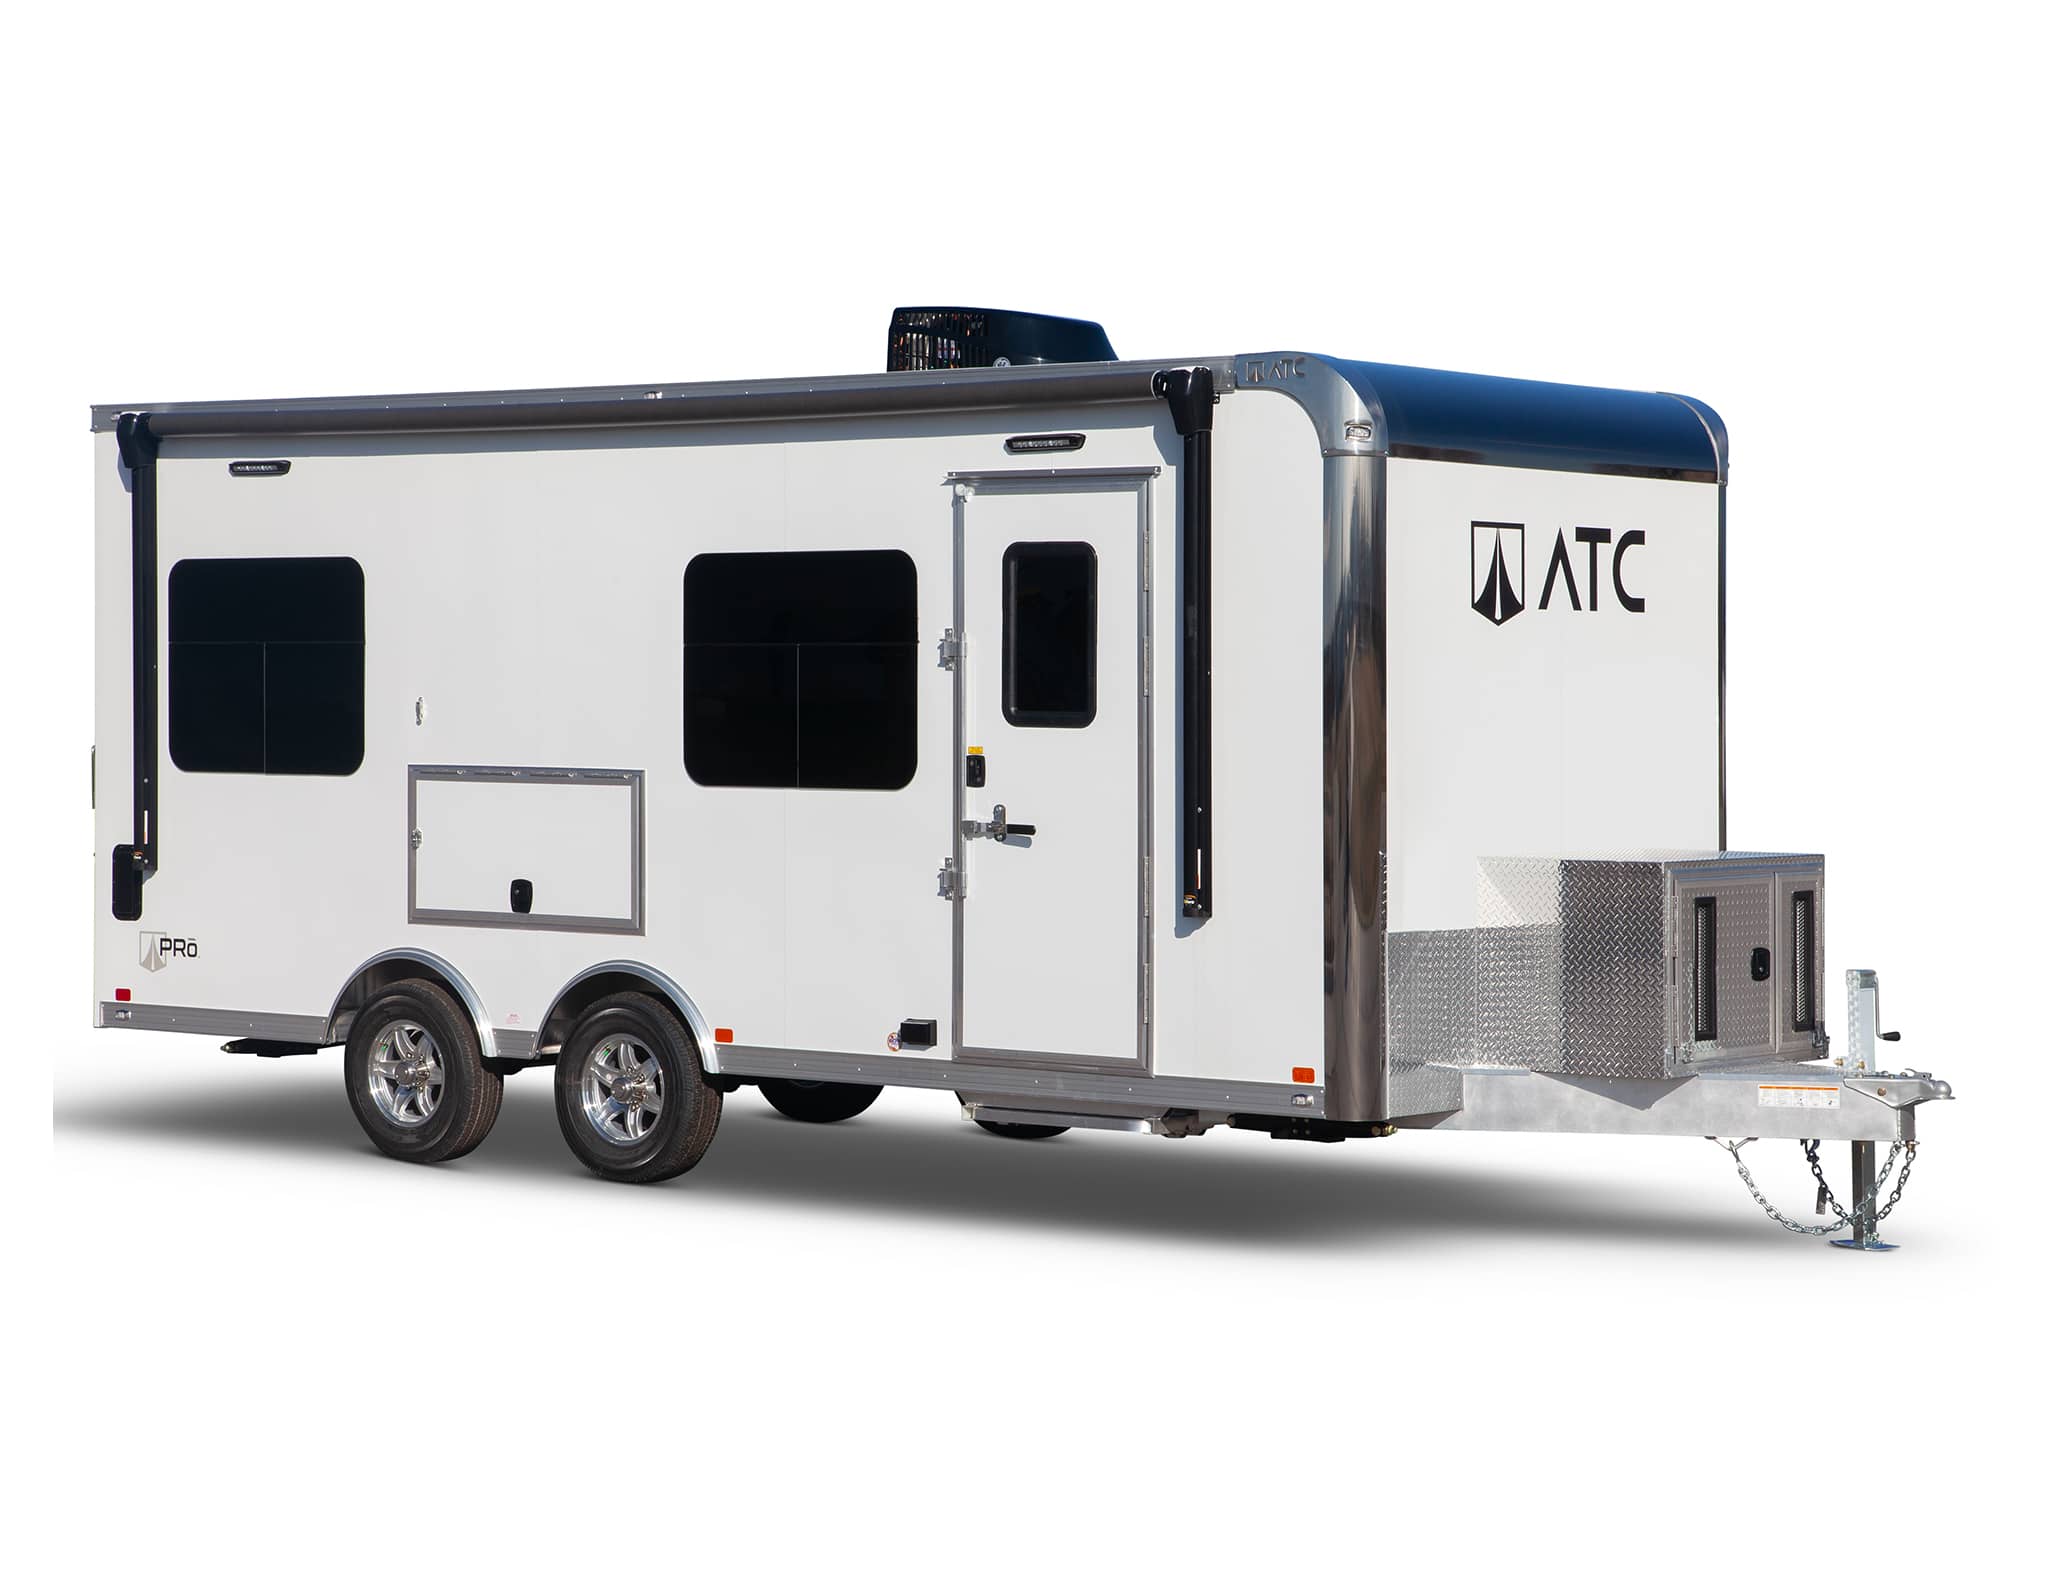 ATC mobile office trailer